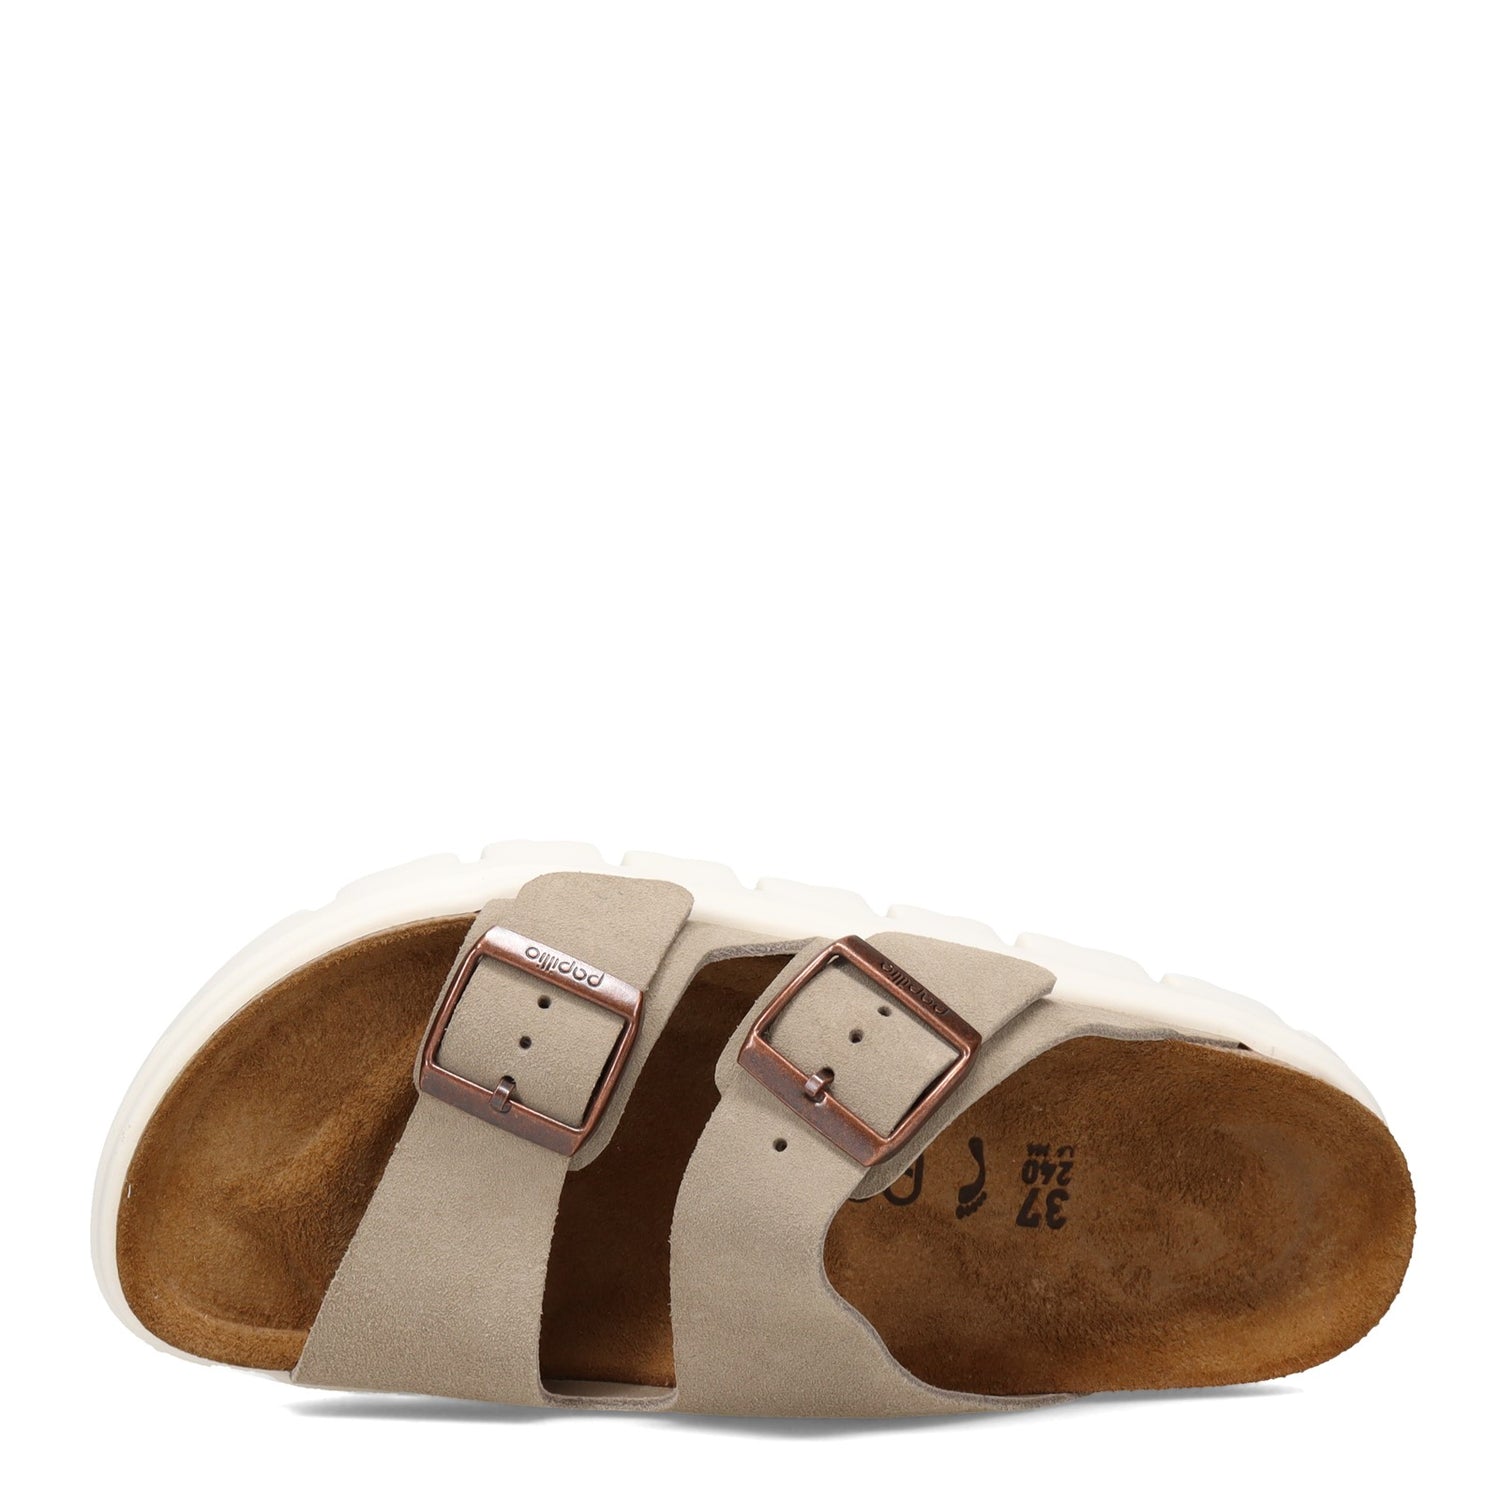 Peltz Shoes  Women's Birkenstock Arizona Chunky Sandal - Narrow Fit TAUPE 1018 135 N